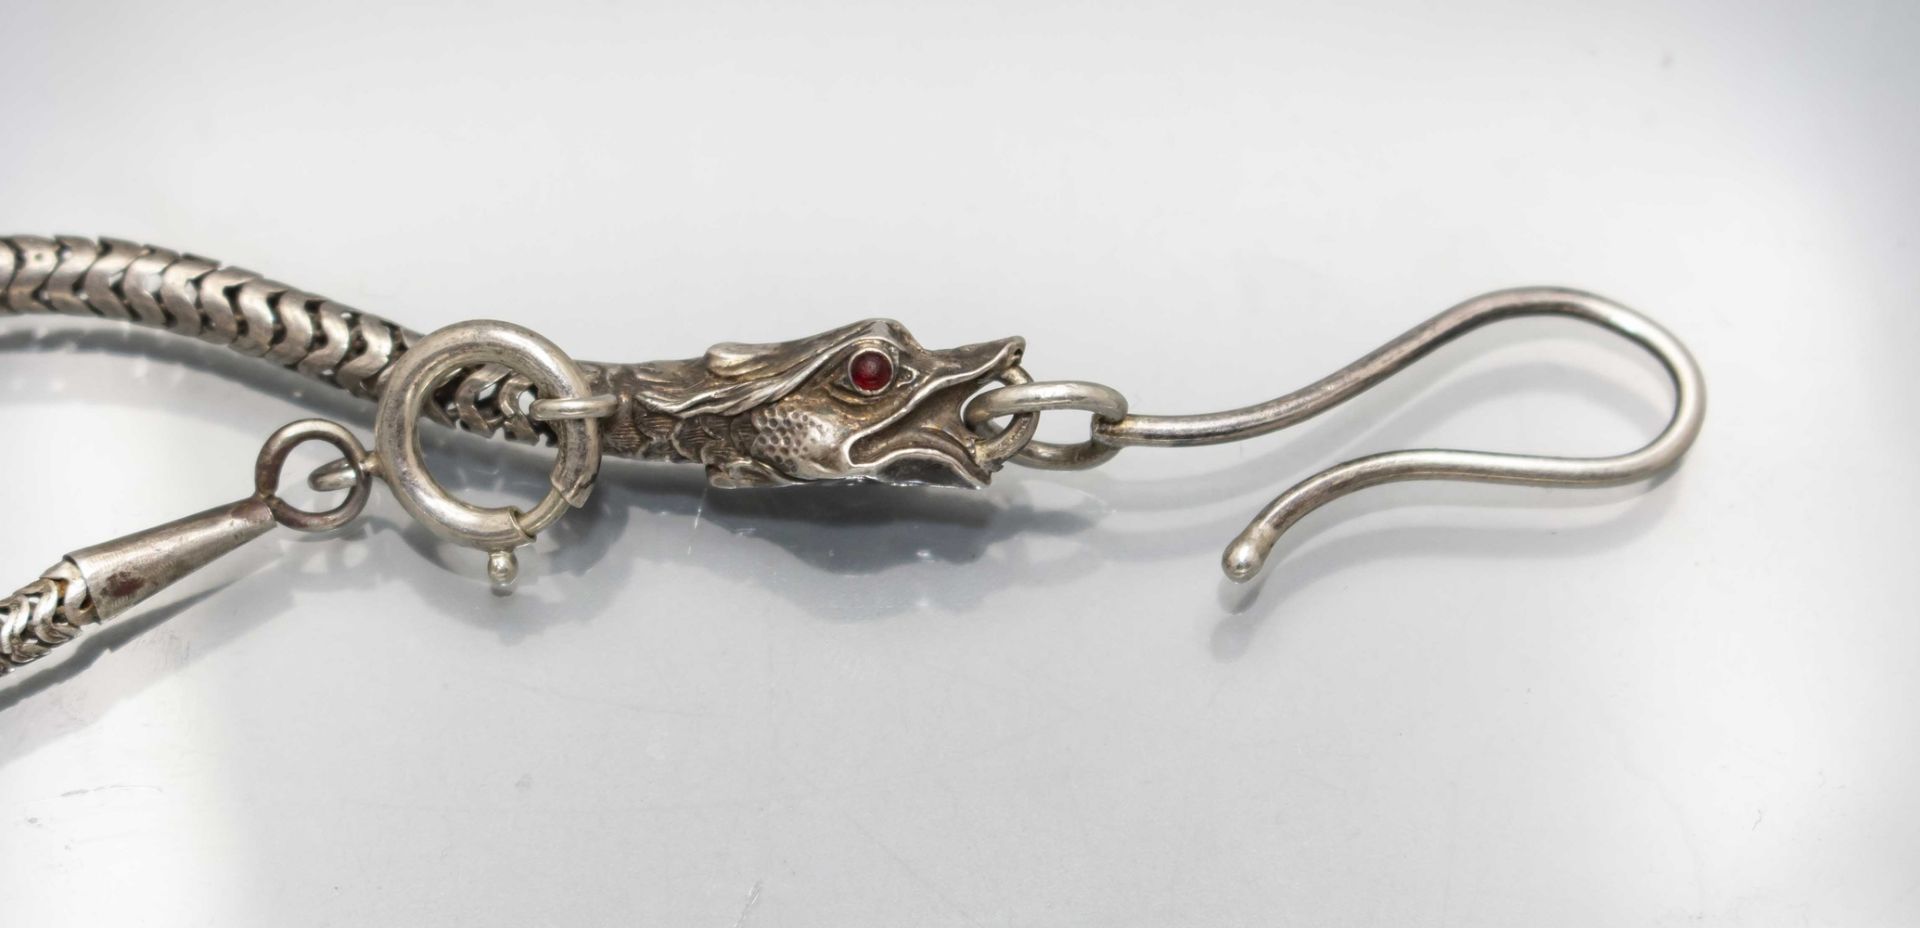 Schlangen-Armband/Kette/Chatelaine / A silver snake bracelet/chain, um 1900 - Image 2 of 3